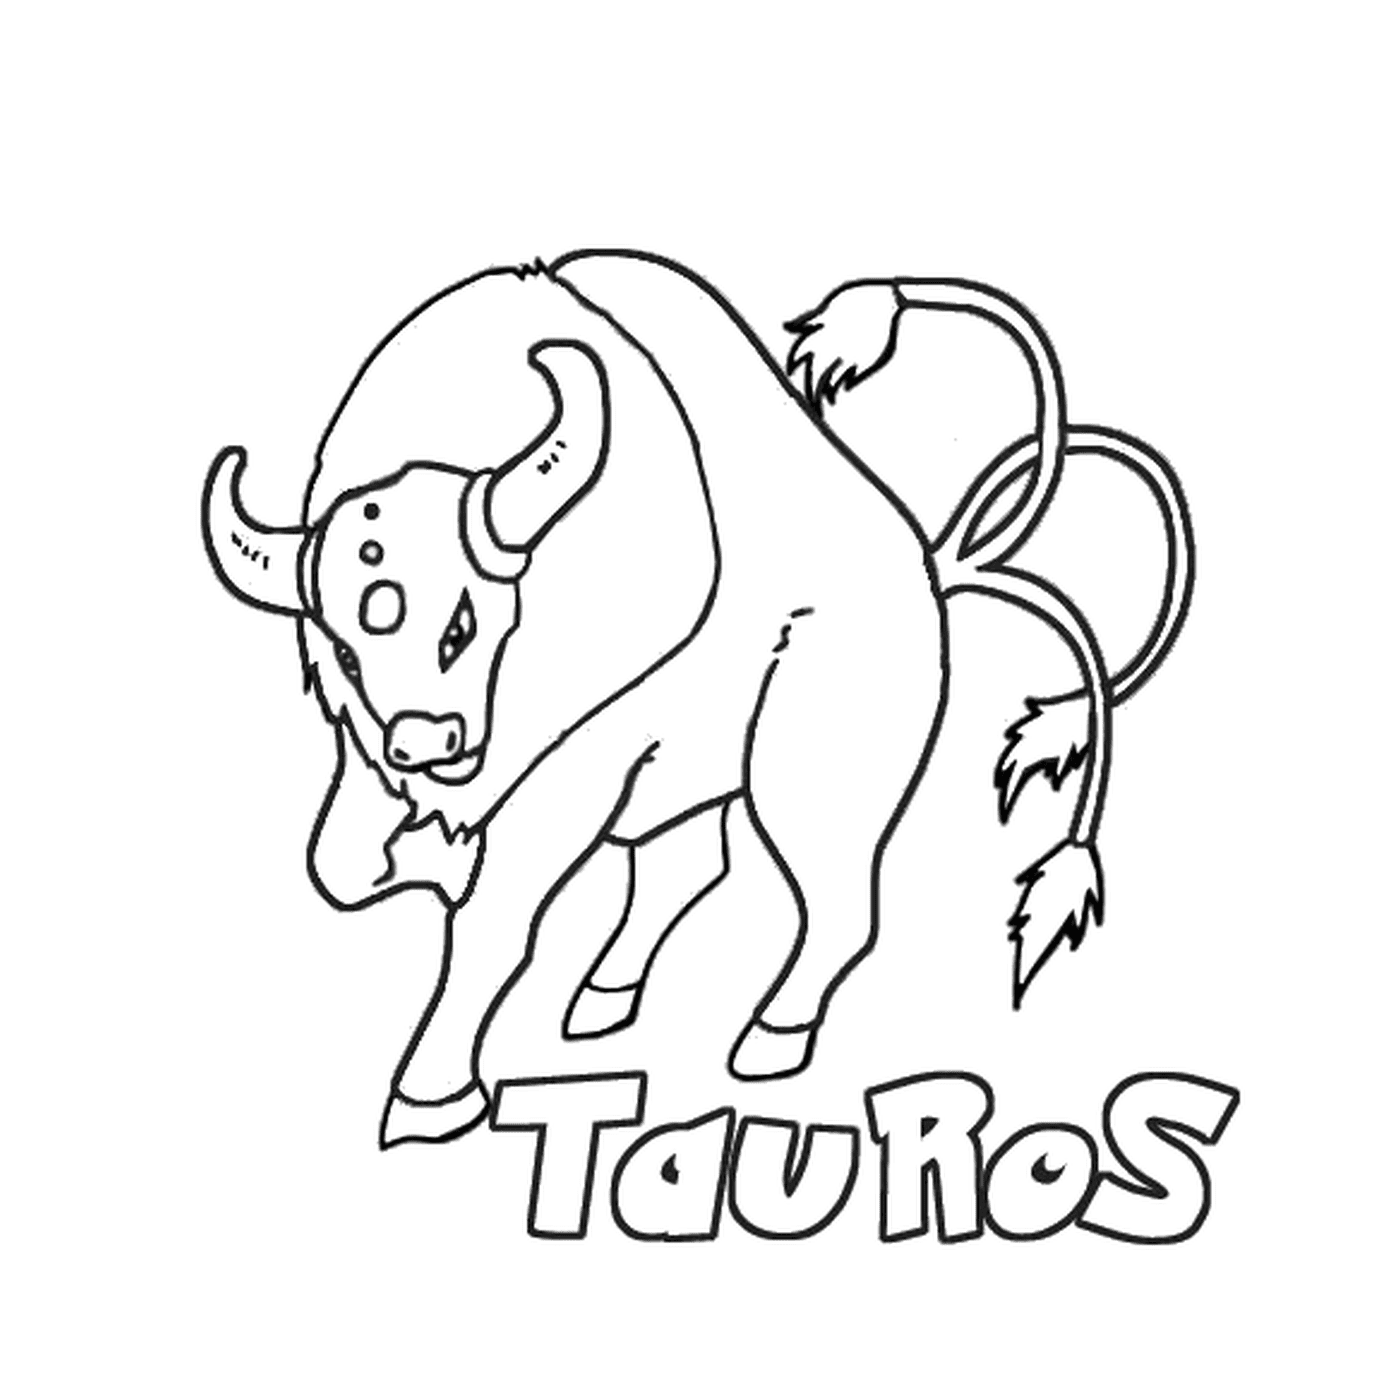  Tauros : Taurus with the word tauros written below 